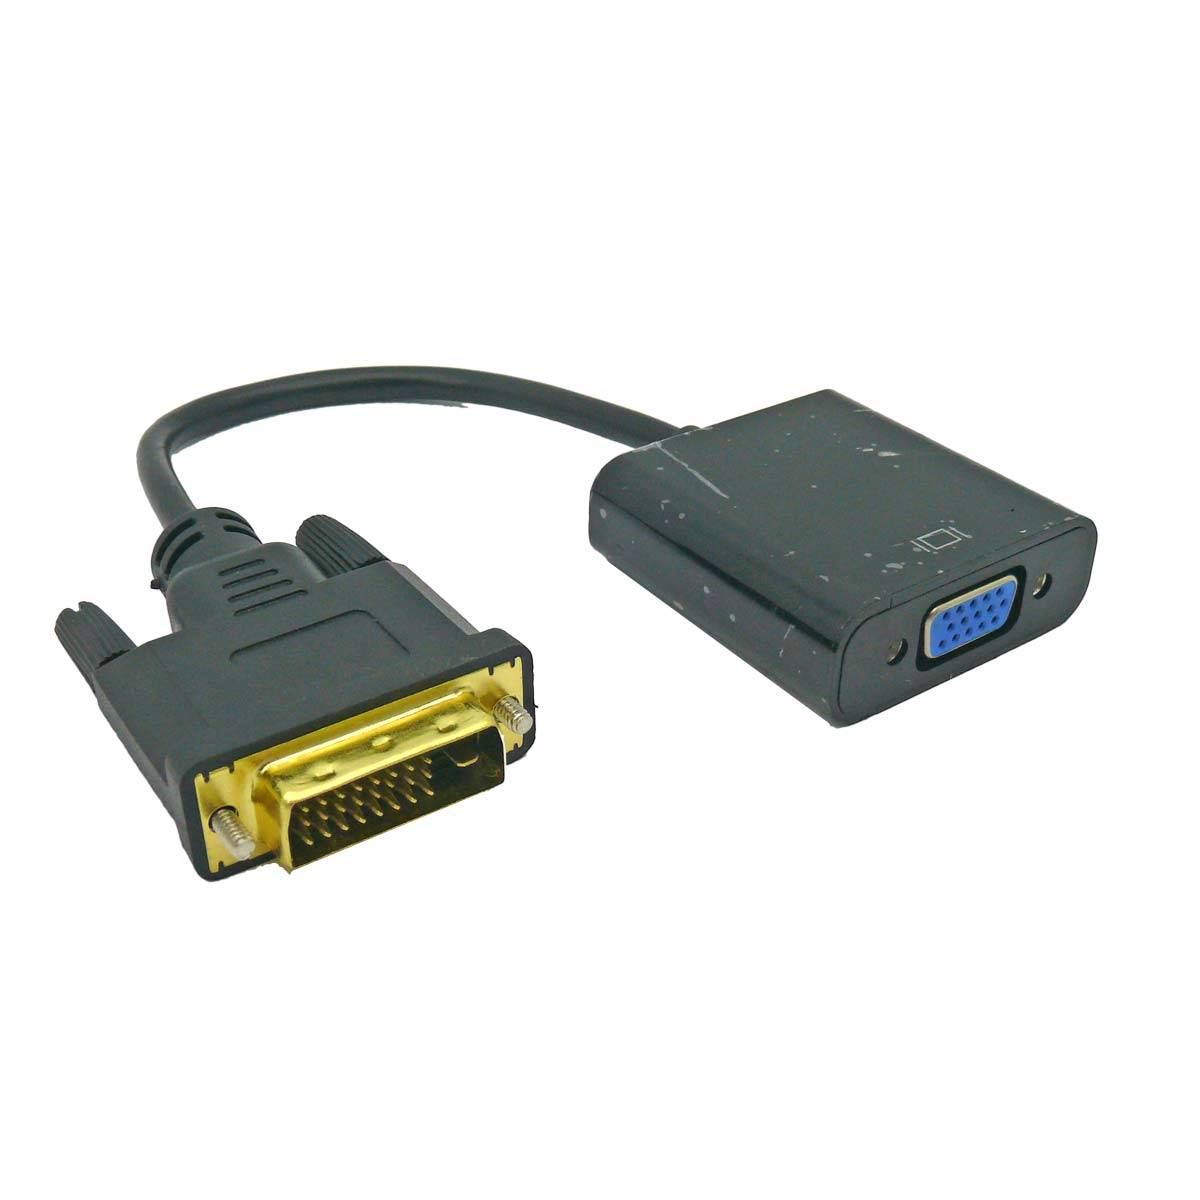 Kabel DVI-D auf VGA Konverter 1080P